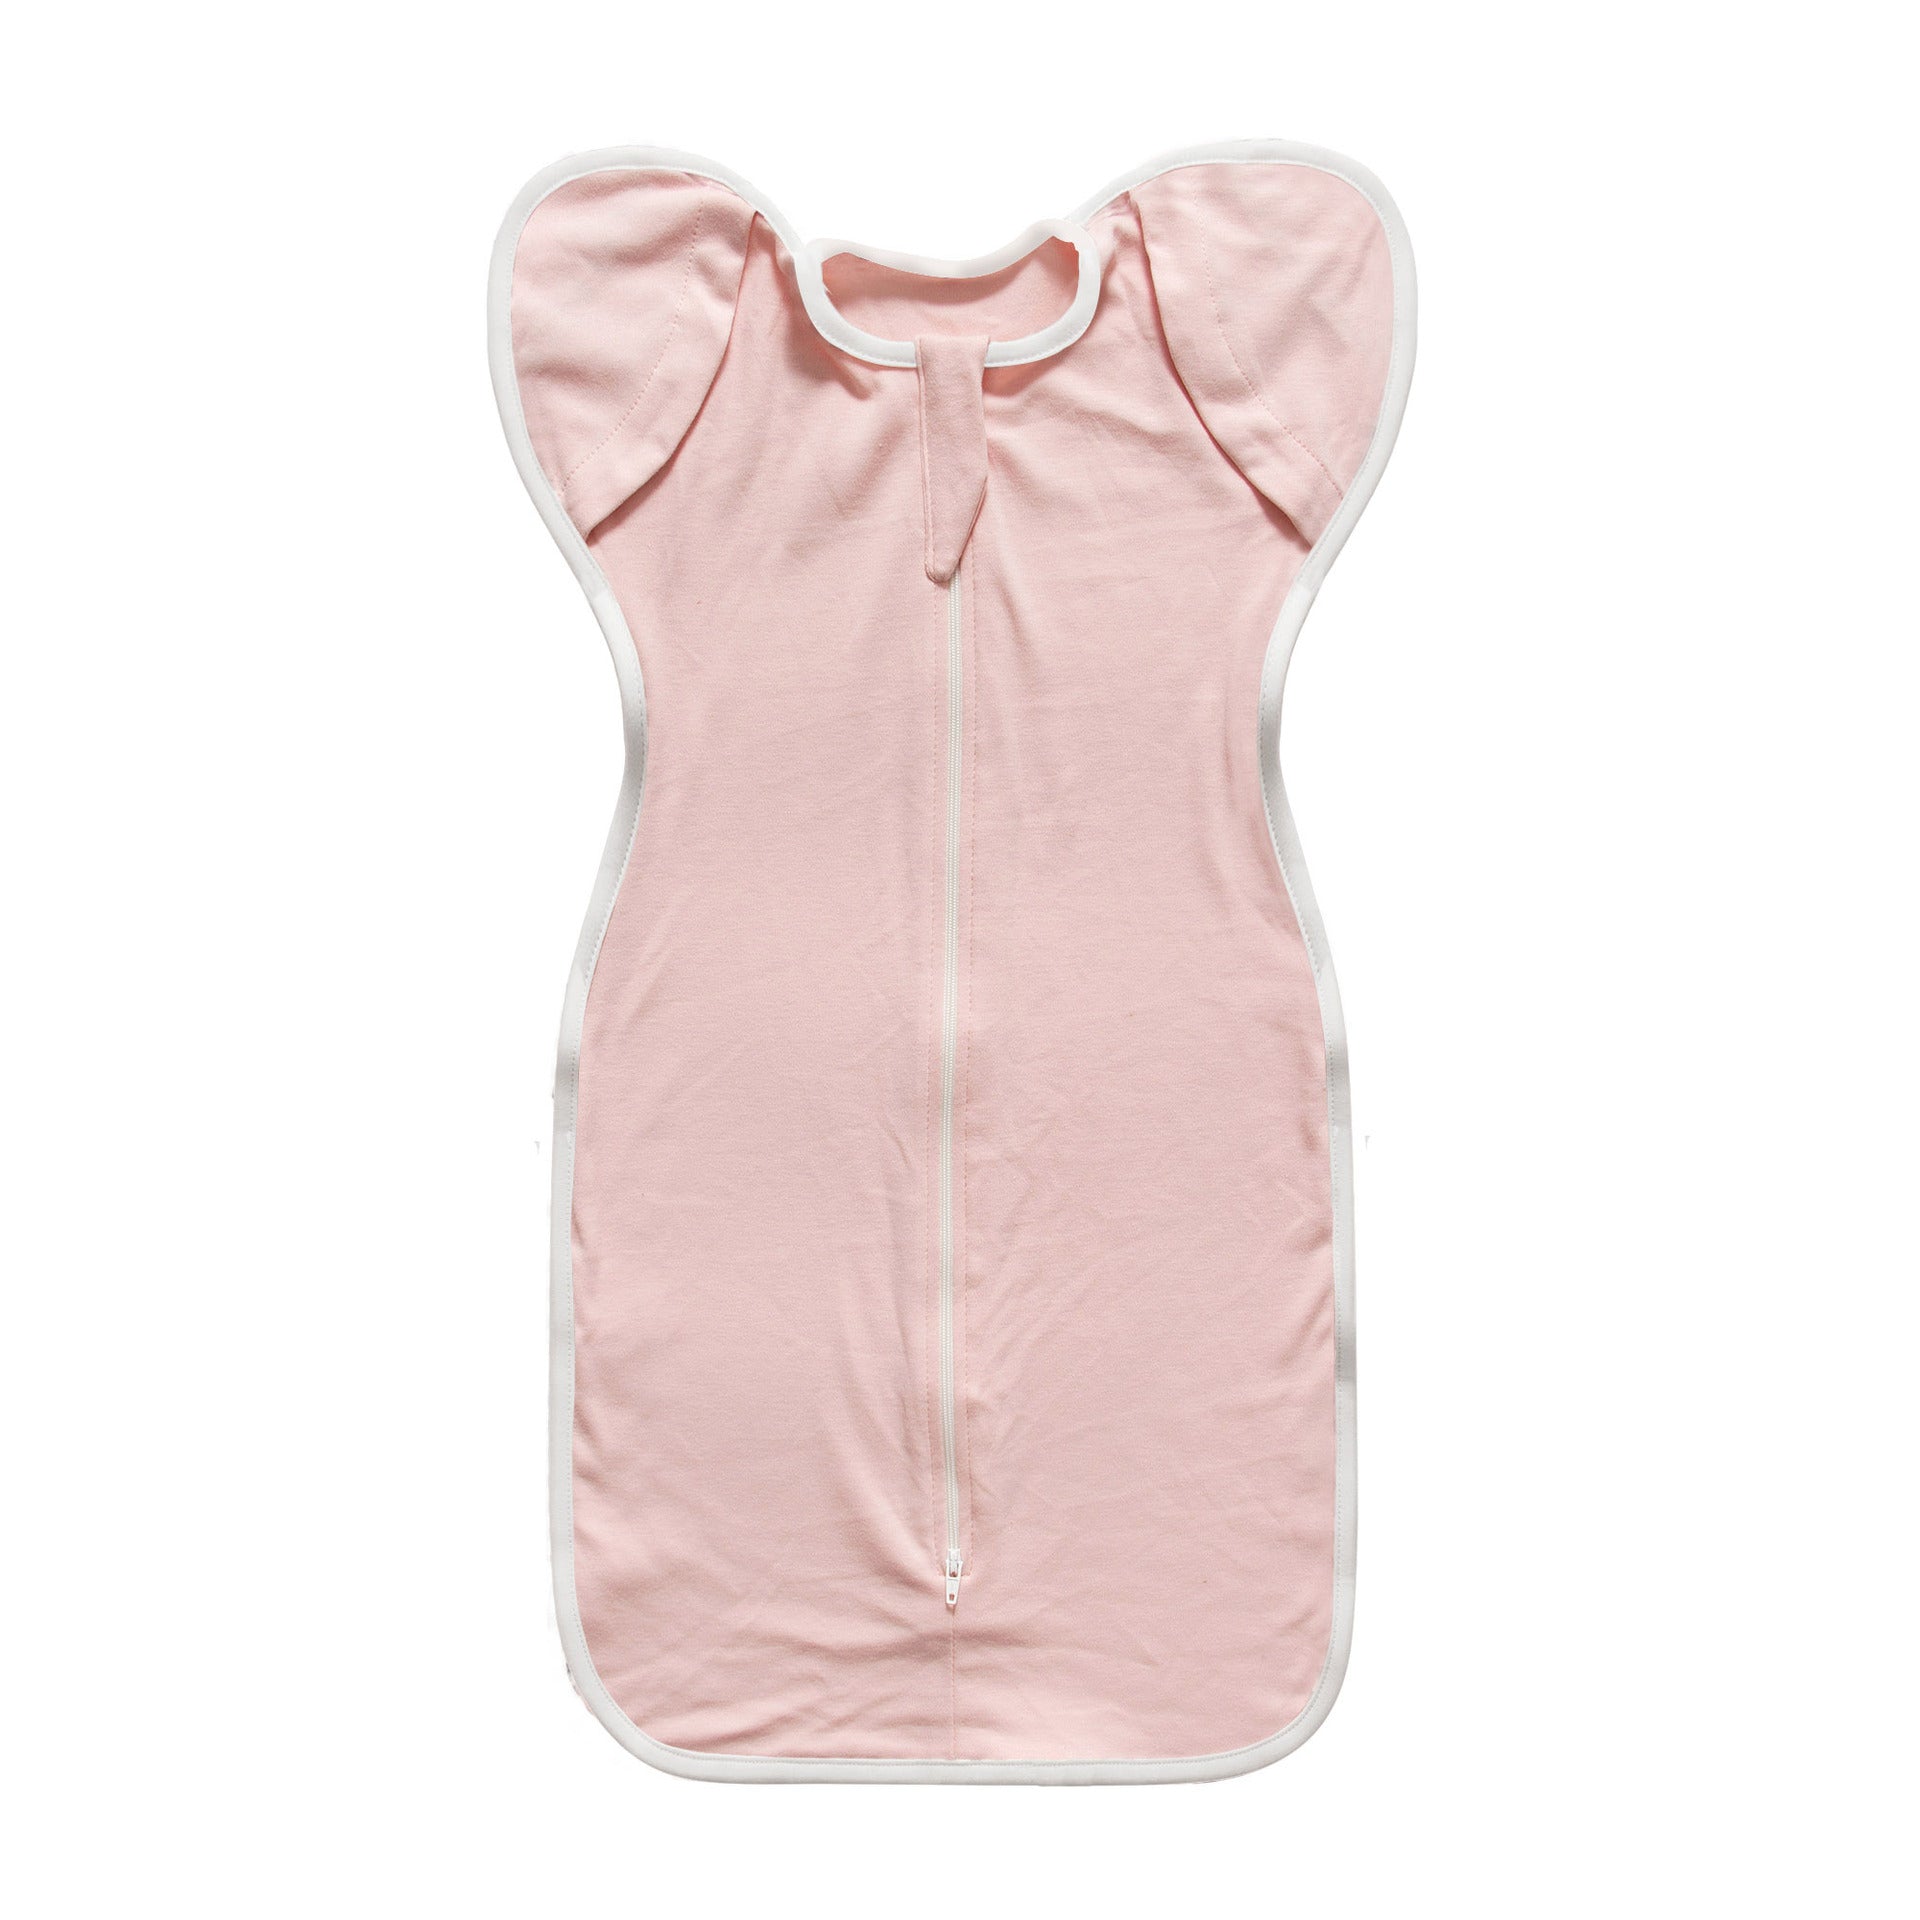 Newborn Baby Sleeping Bag Arms-up Swaddle Startle Sack 0.3TOG-S35-Pink